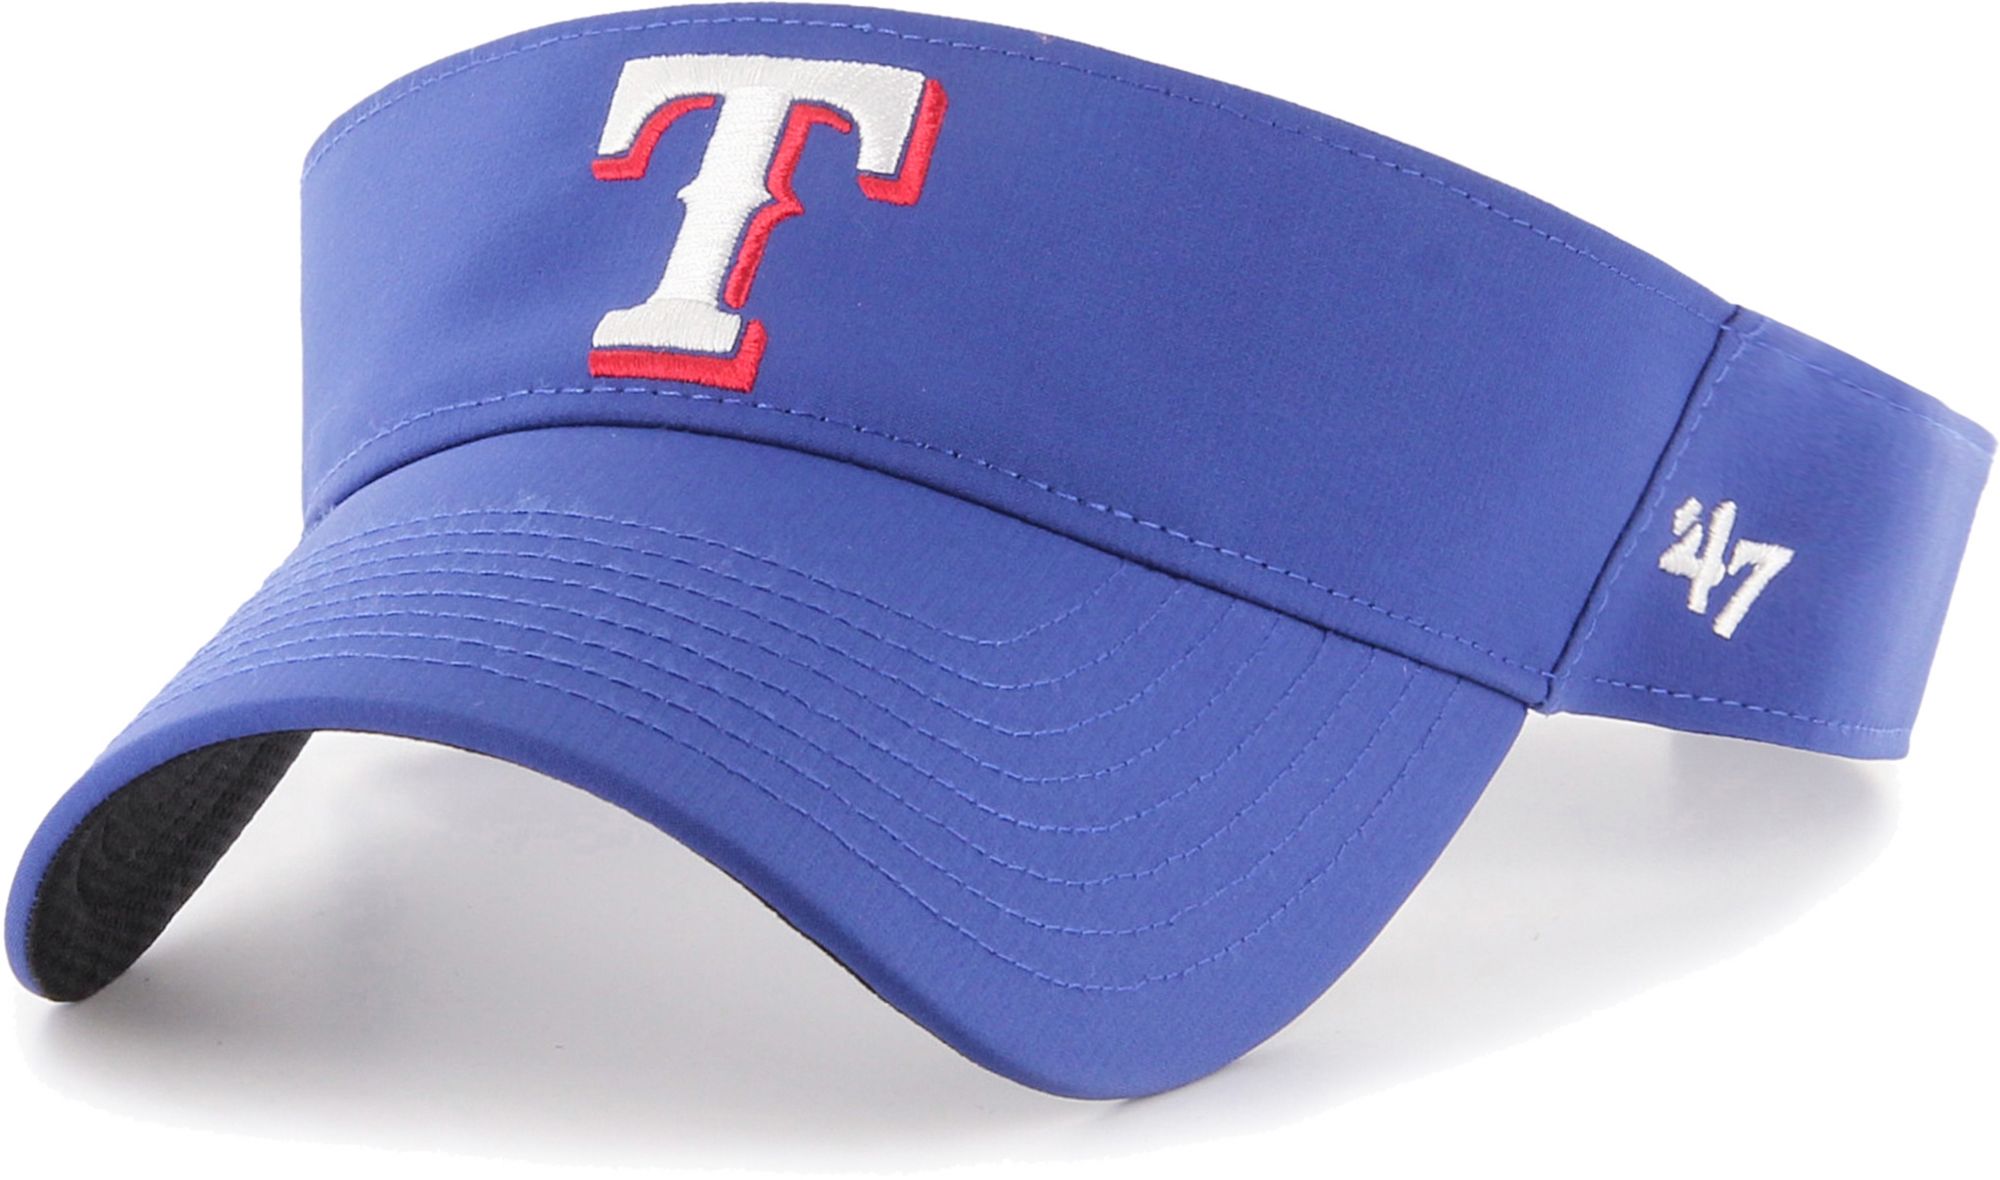 47 Texas Rangers Clean Up Adjustable Hat - Khaki